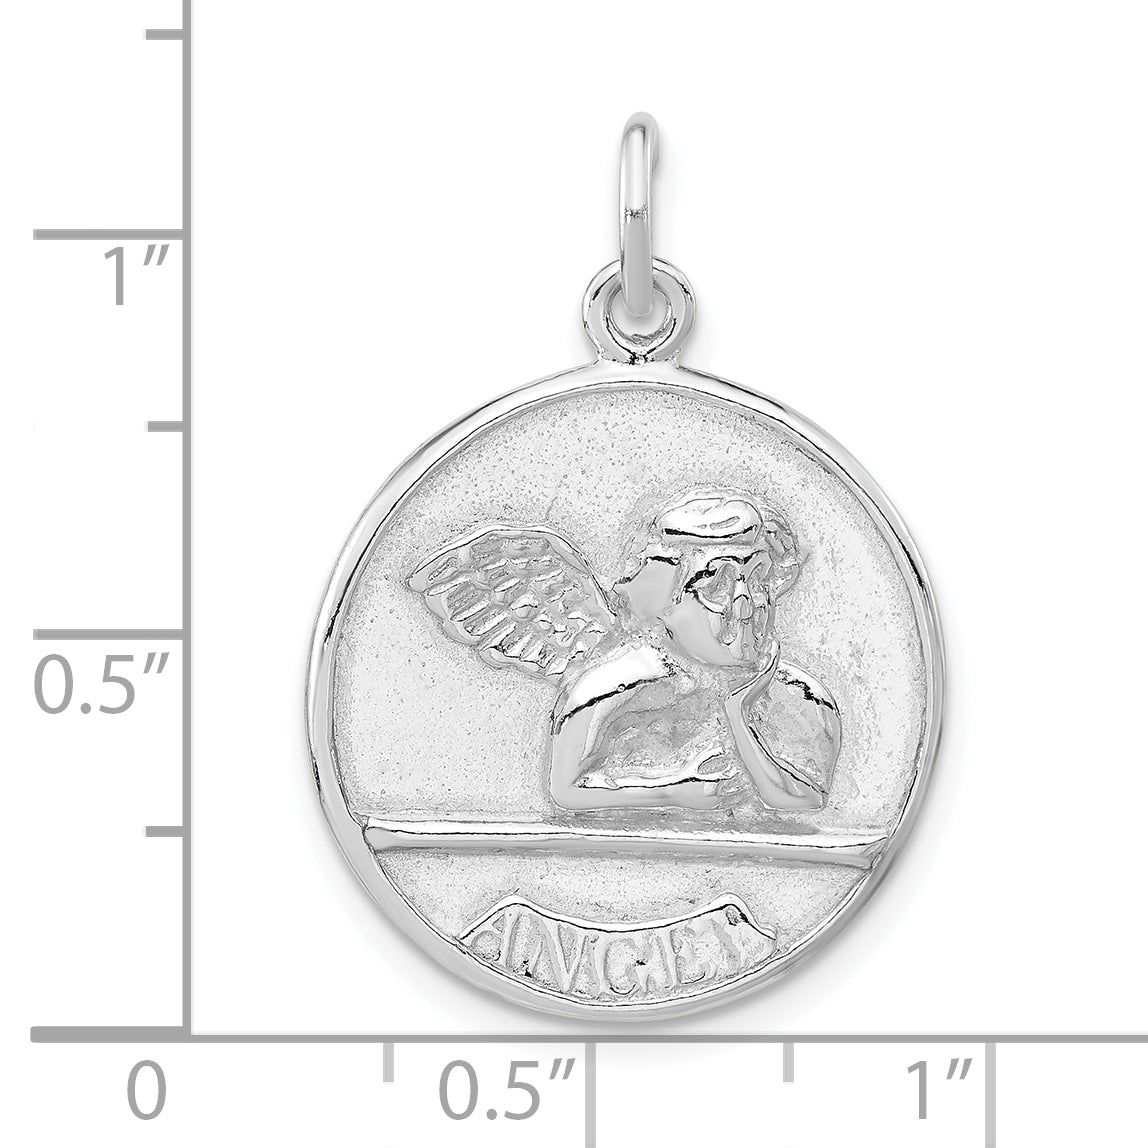 Sterling Silver Polished Raphael Angel Pendant